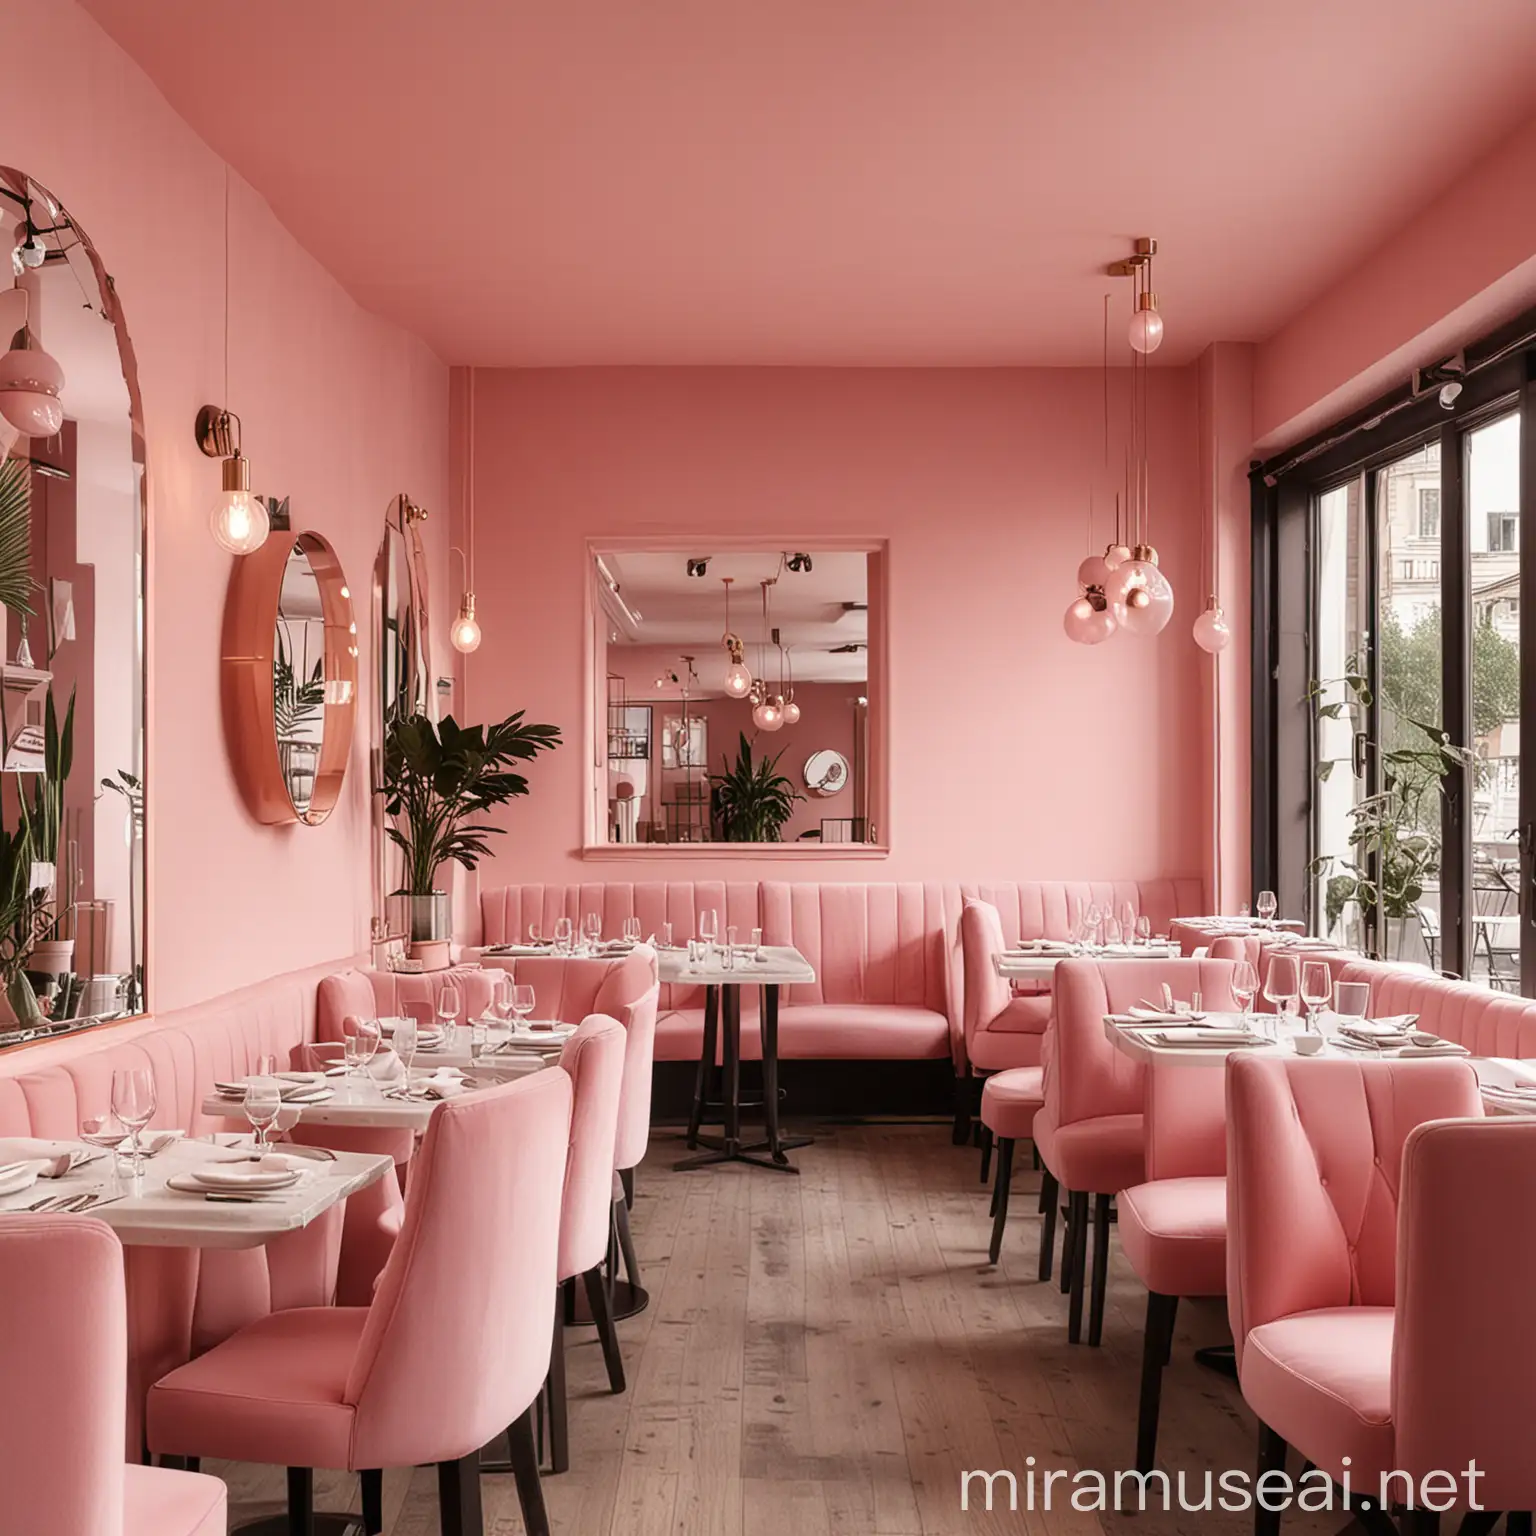 Millennial Pink Interior Restaurant Scene with Soft Lighting and Modern Decor